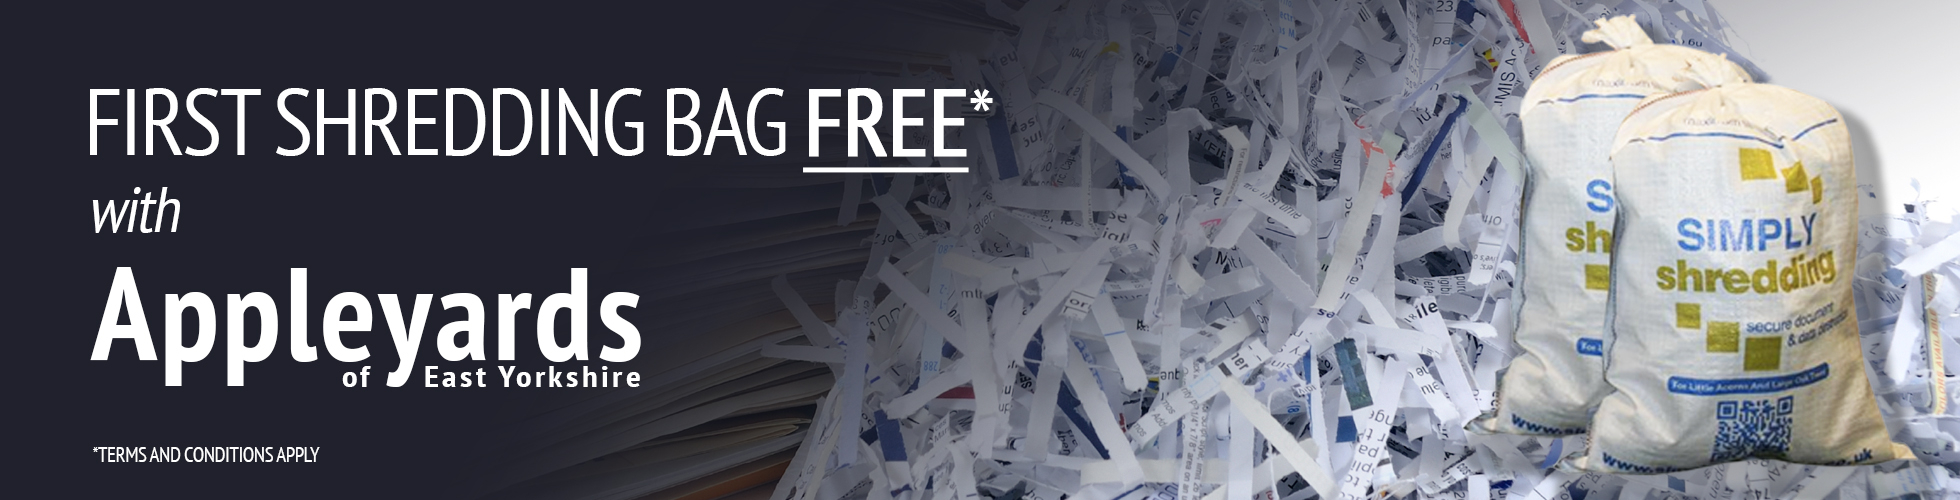 First shredding bag free